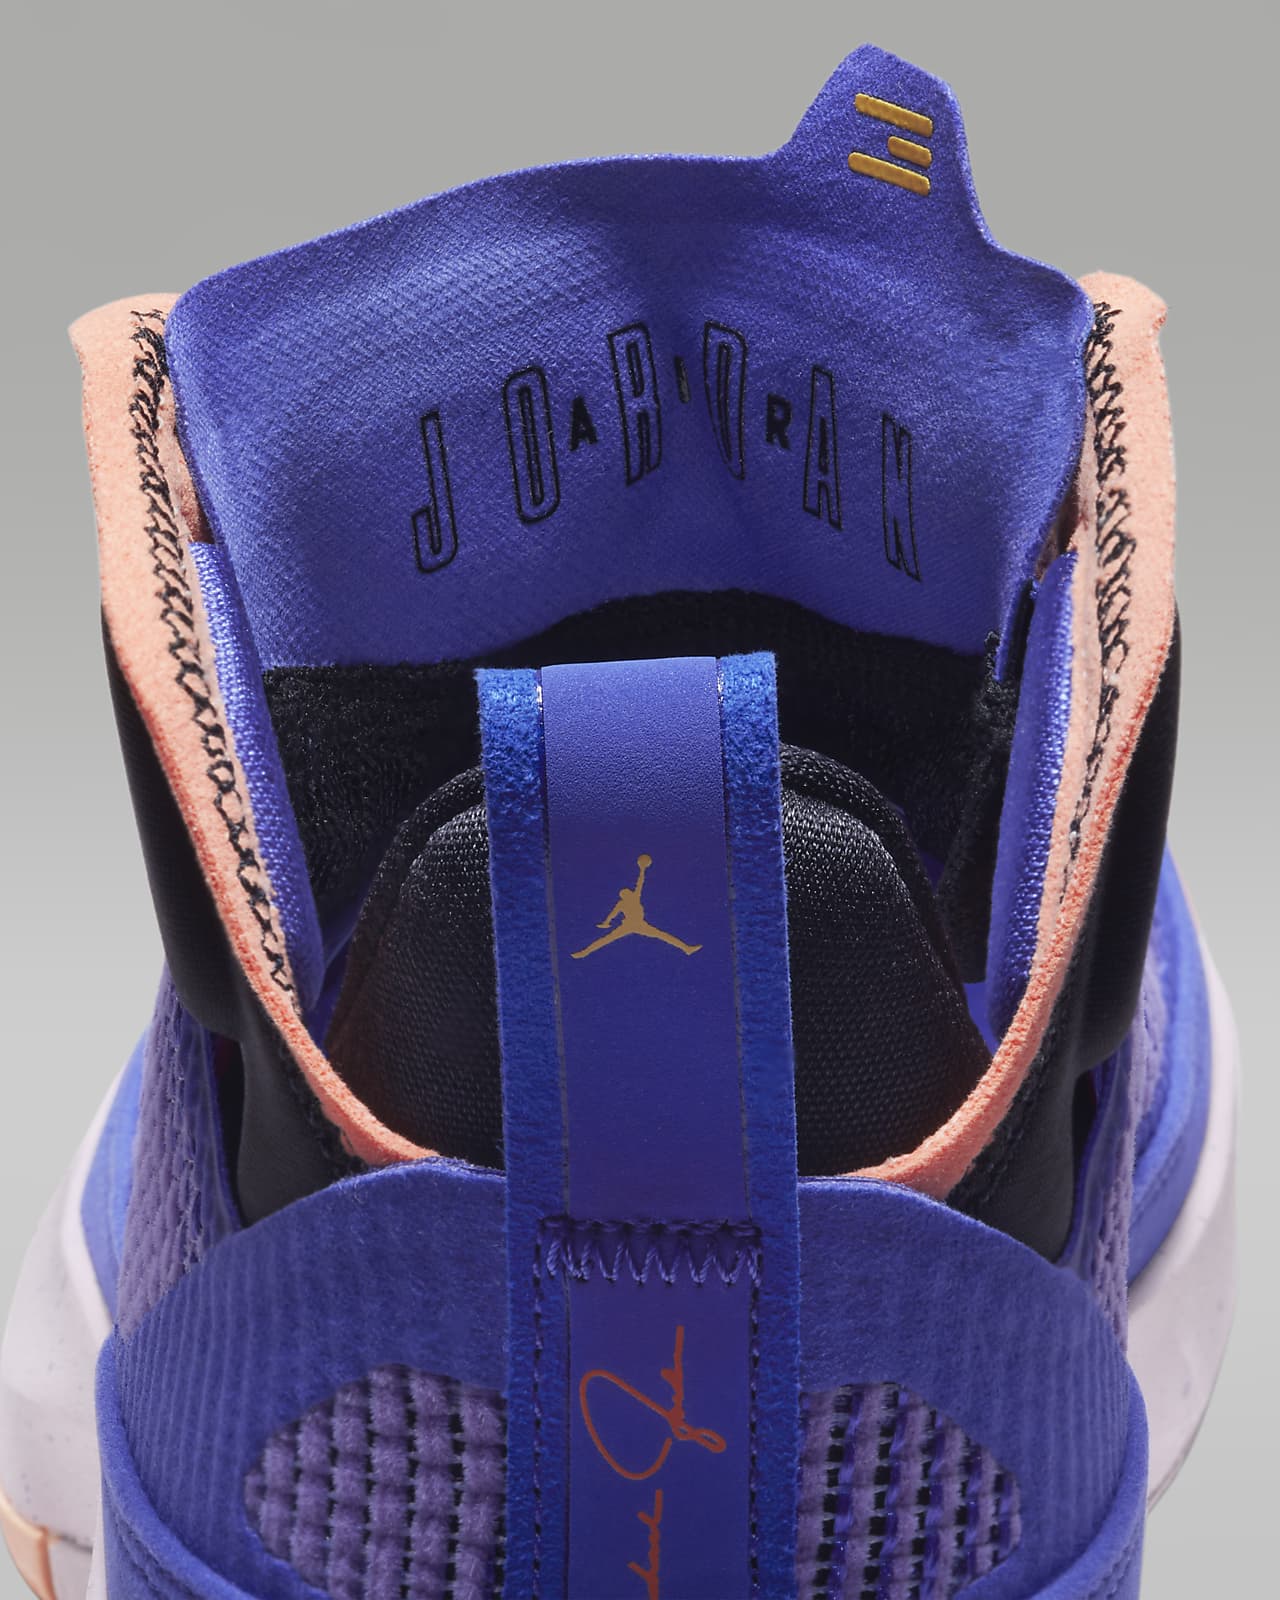 Air Jordan XXXVII Tatum Basketball Shoes